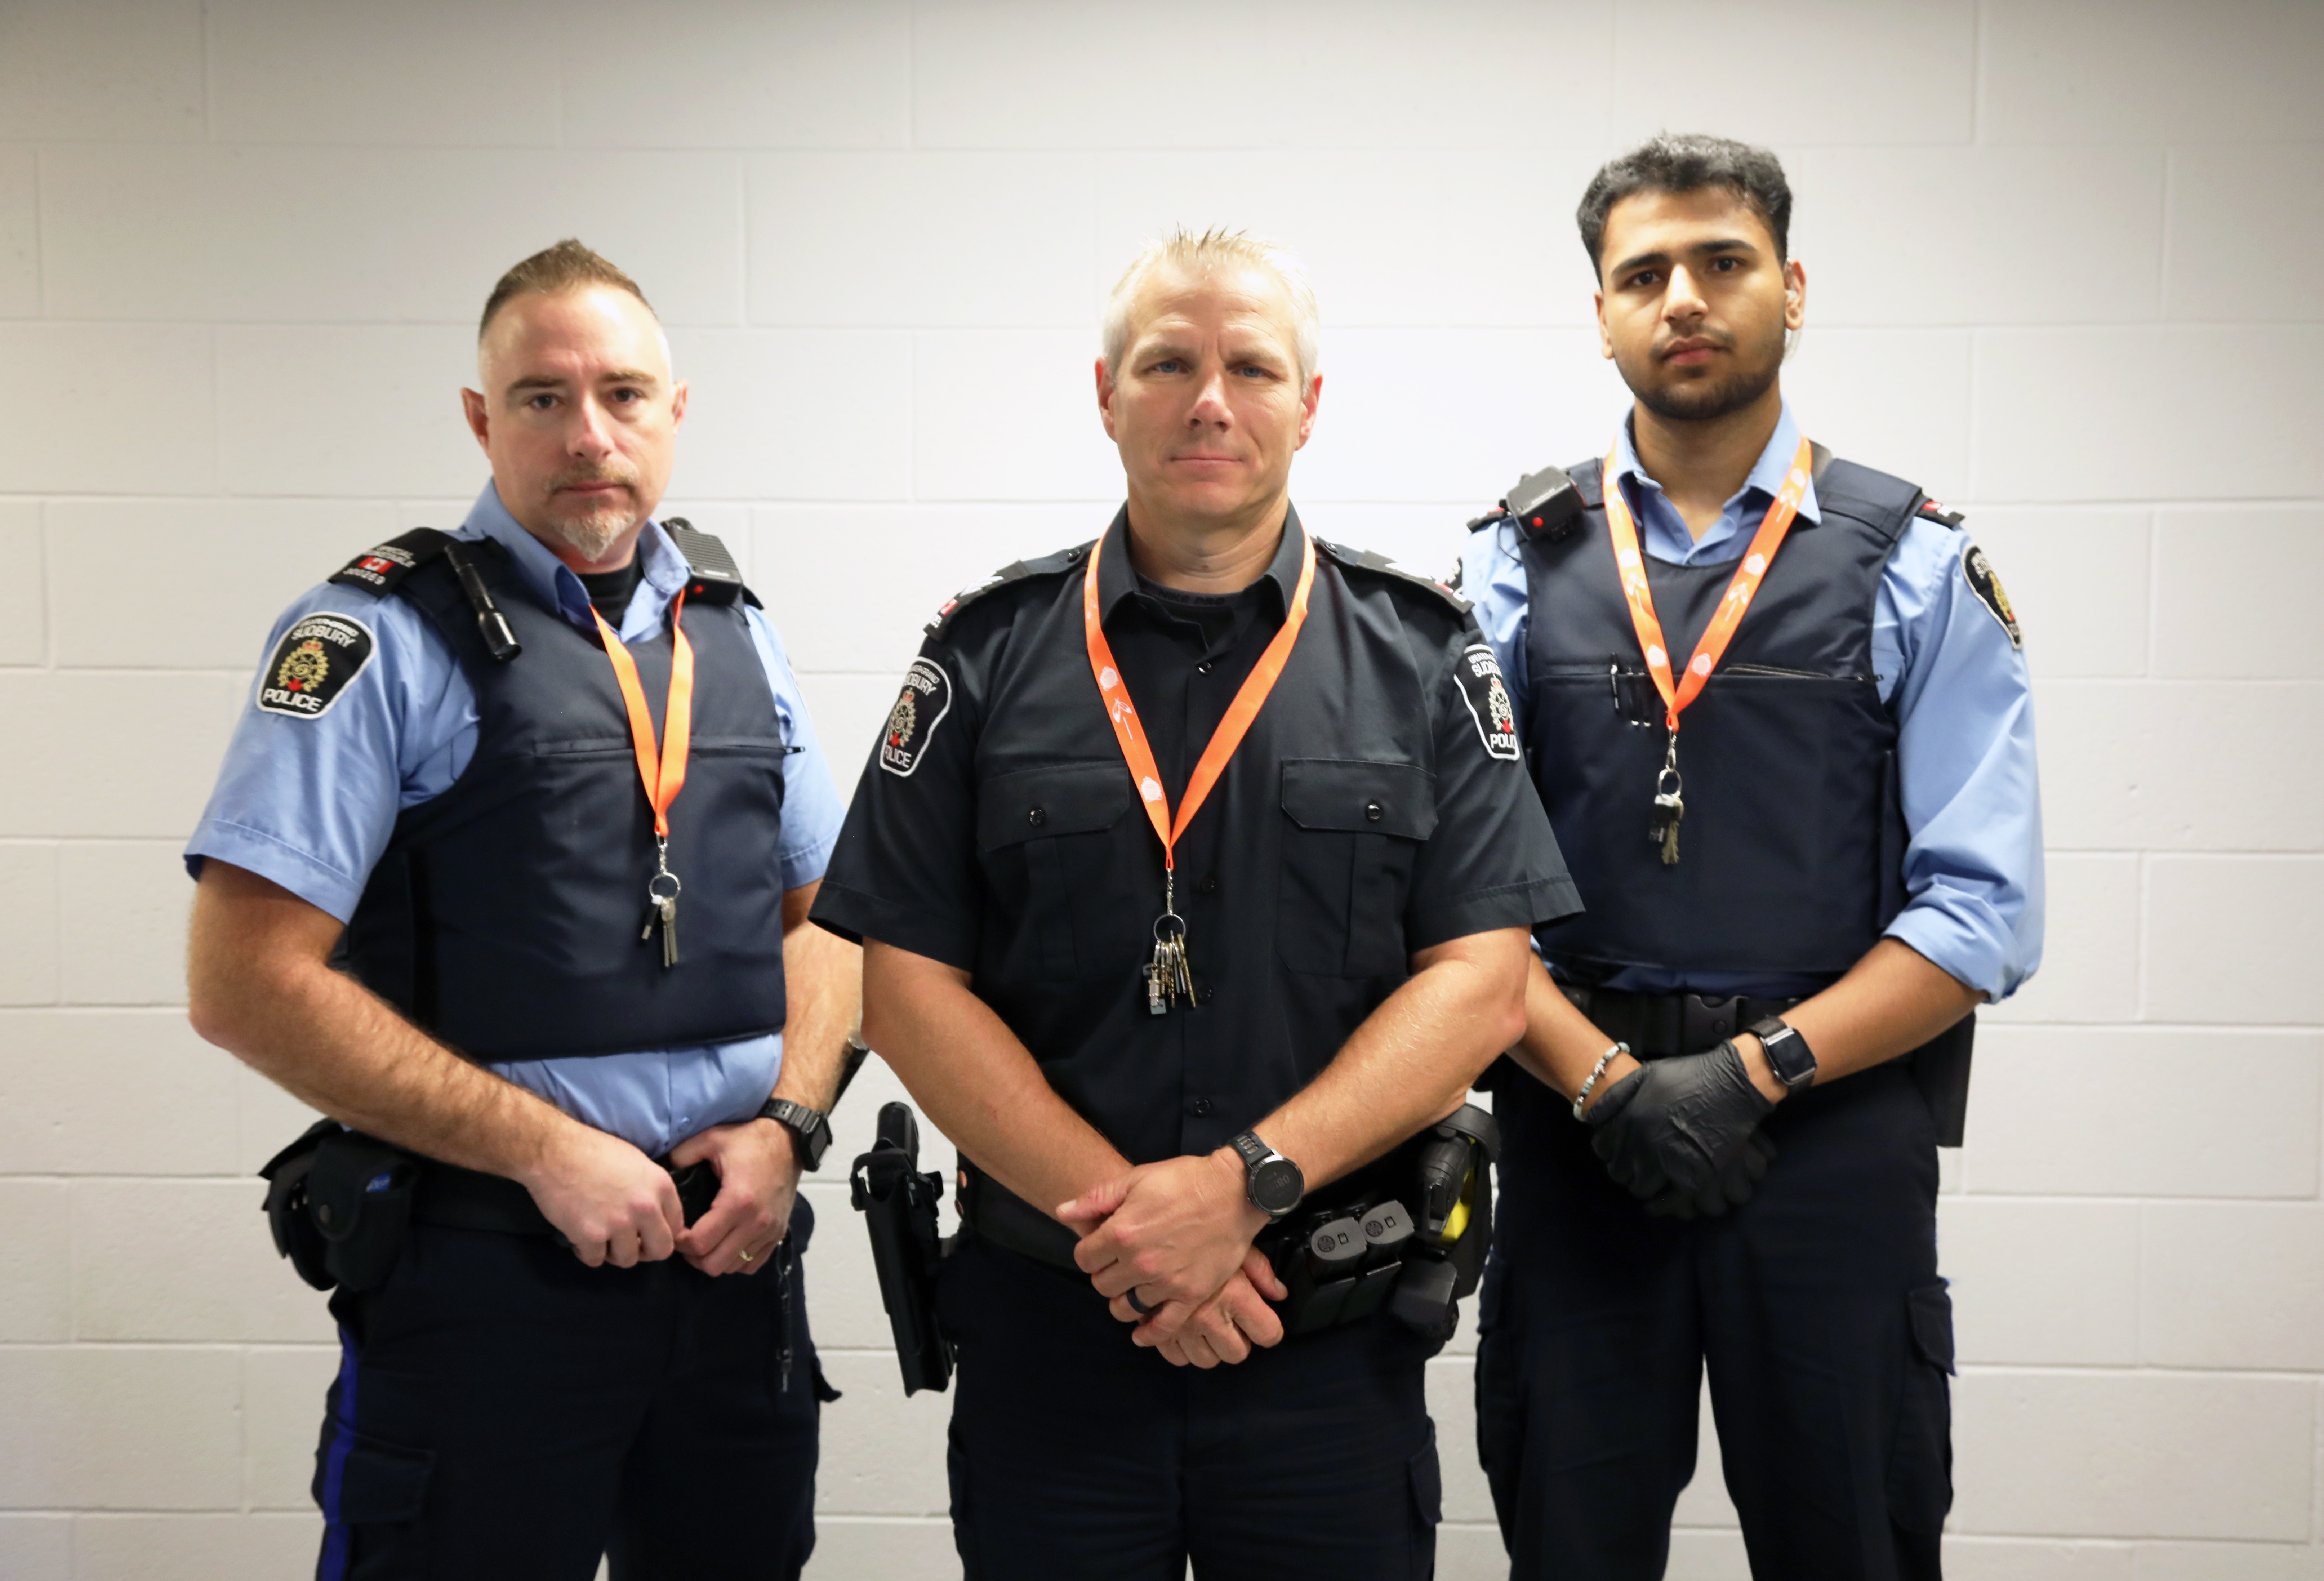 group of police officers wearing orange lanyards